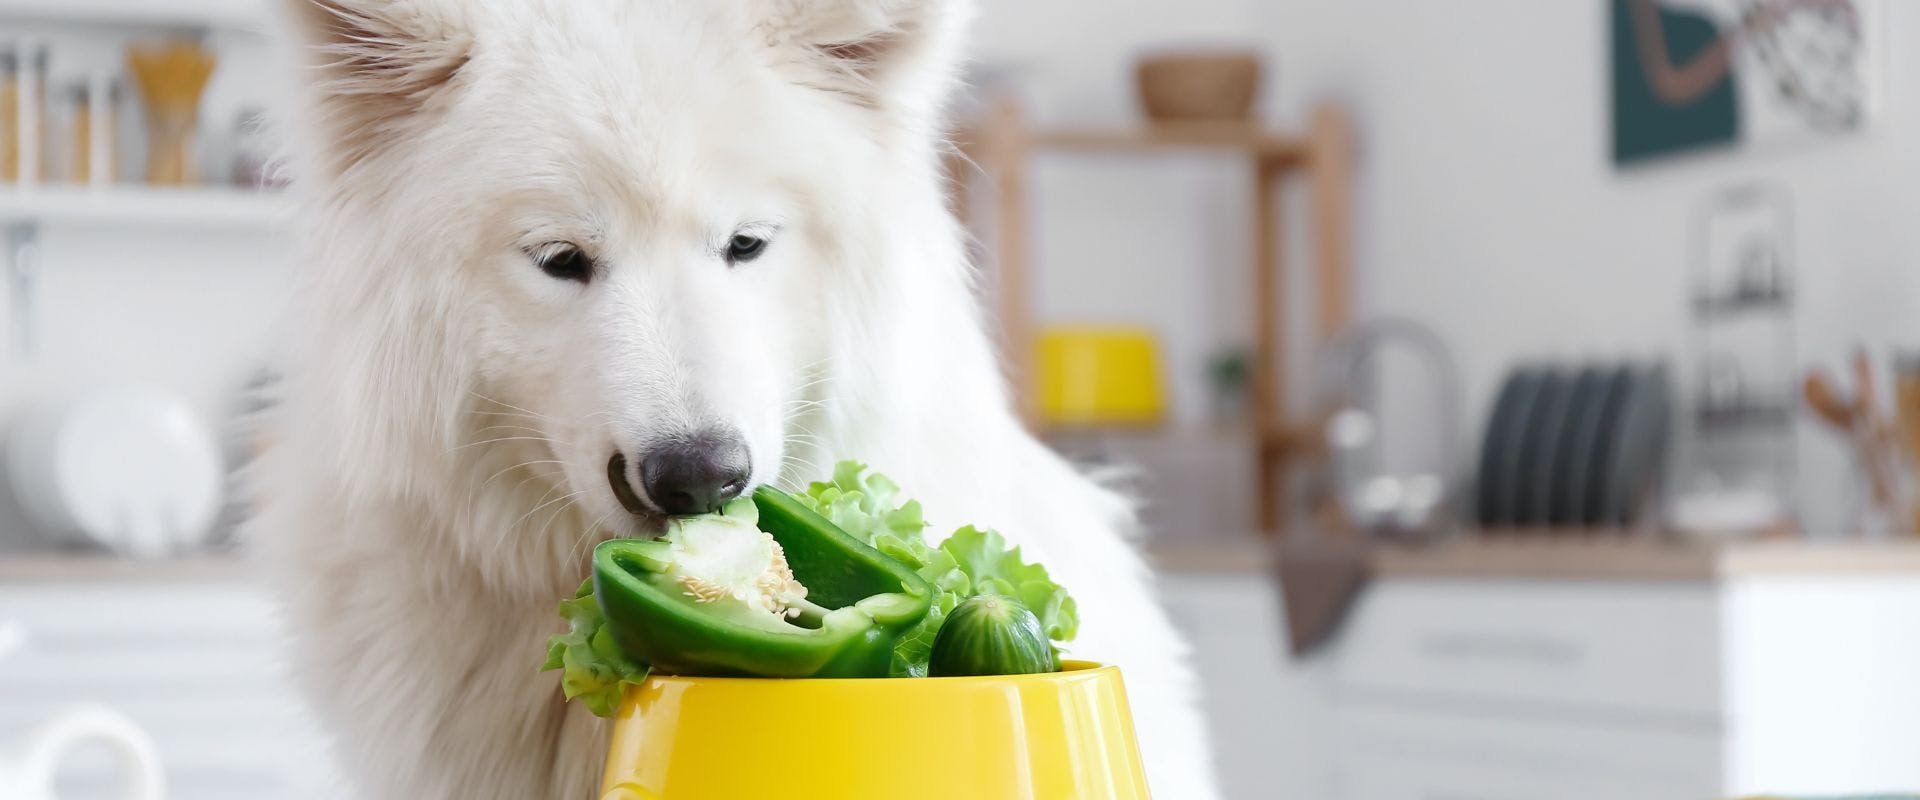 White fluffy dog sniffing salad